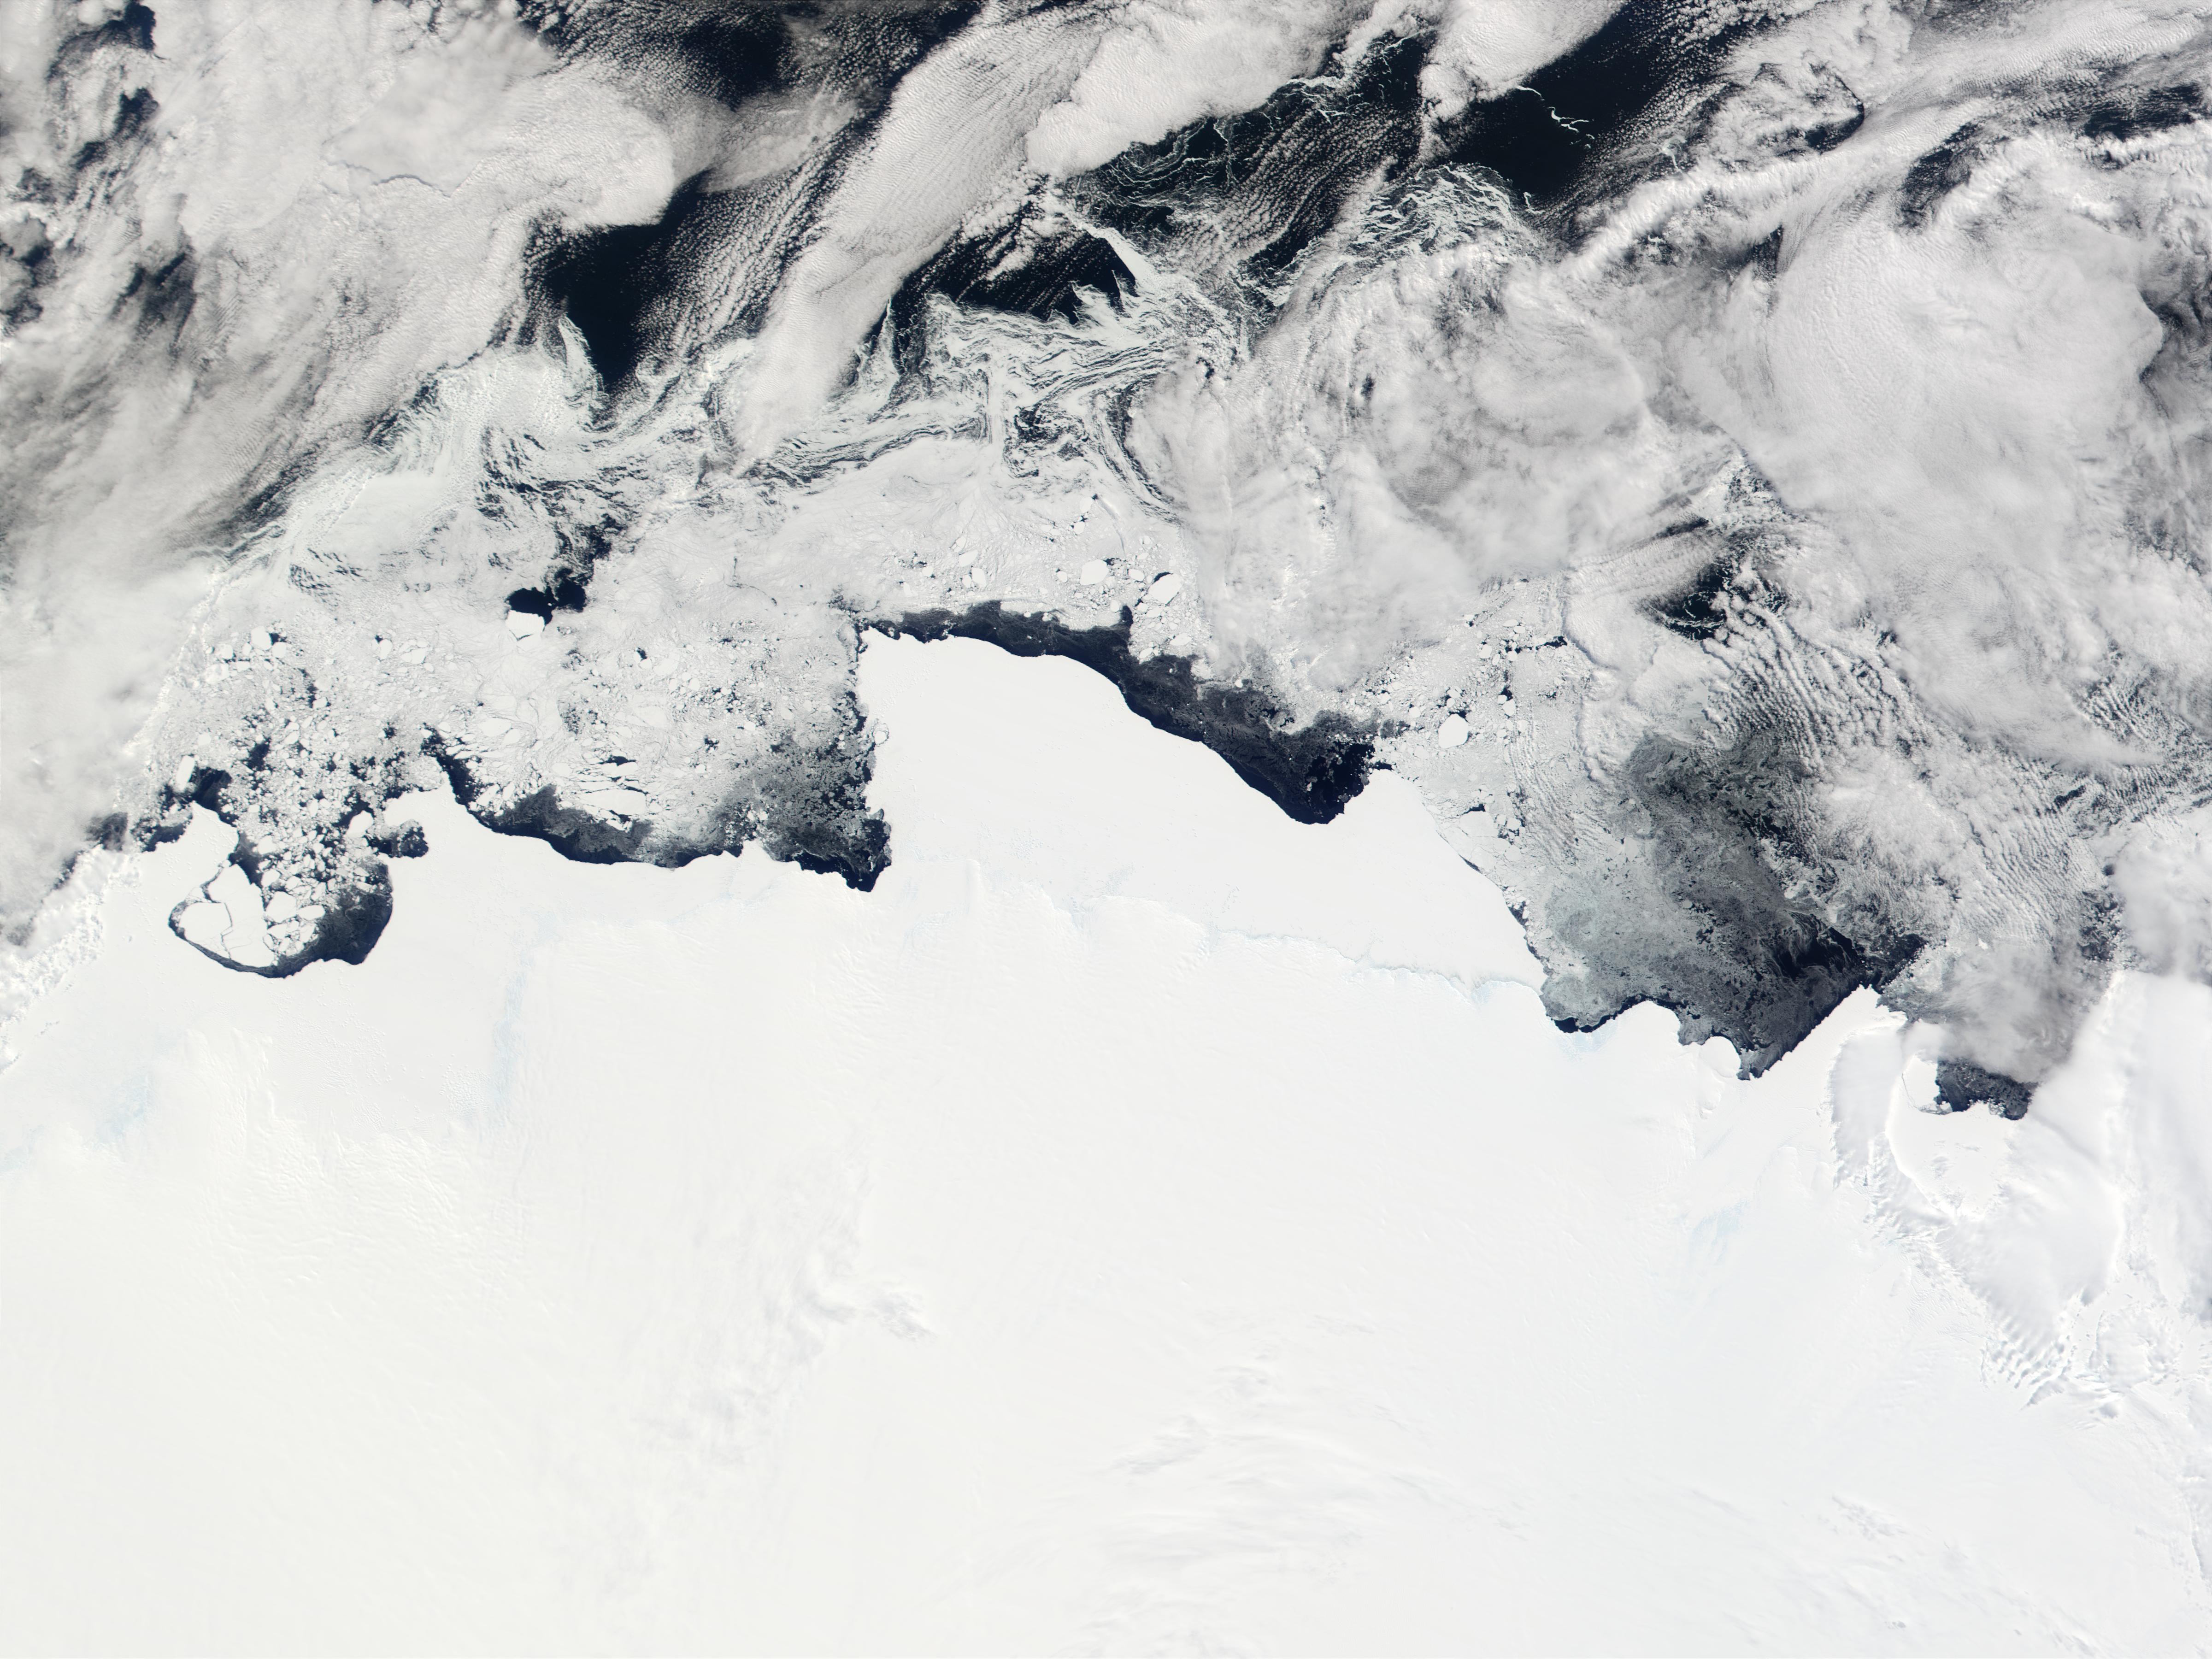 Banzare Coast, Clarie Coast, Adelie Coast, and George V Coast, Antarctica - related image preview